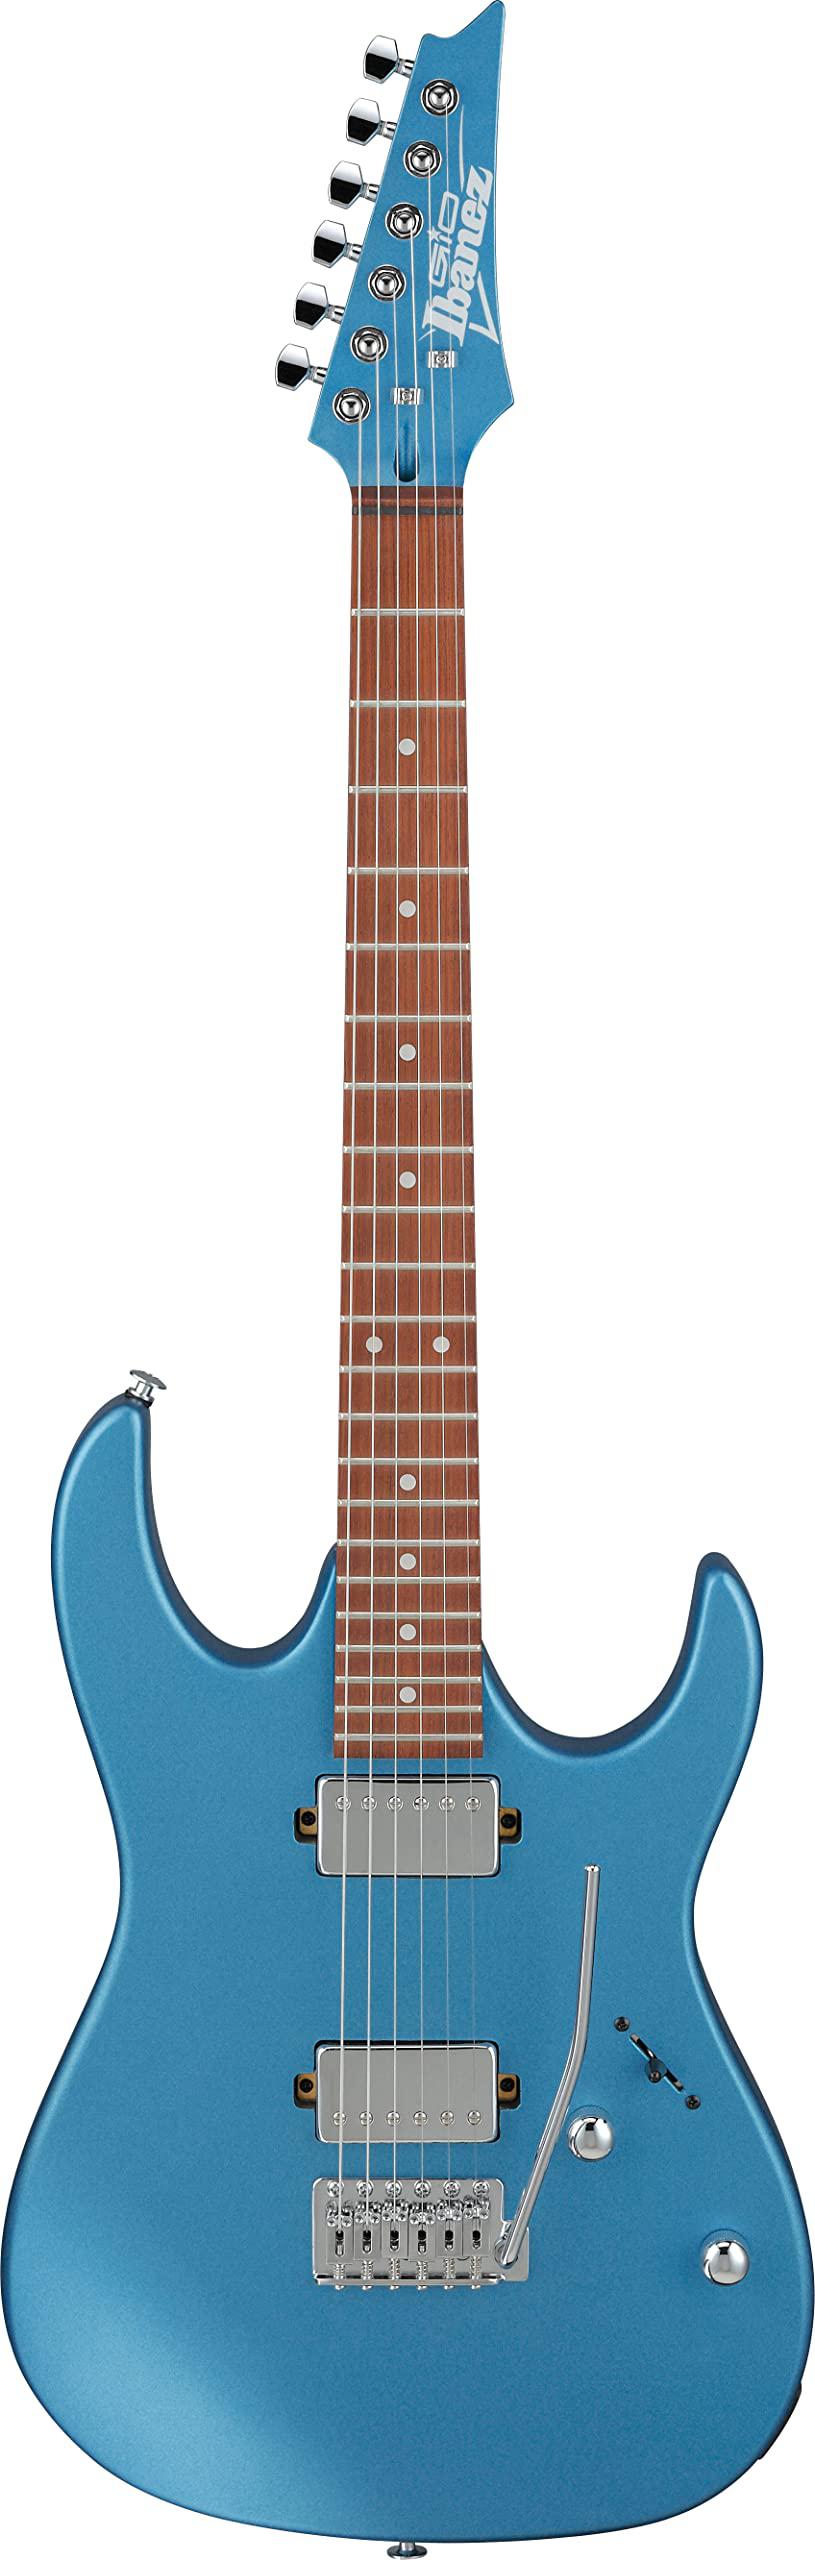 Ibañez - Guitarra Eléctrica Gio RG, Color: Azul Claro Metalico Mate Mod.GRX120SP-MLM_21